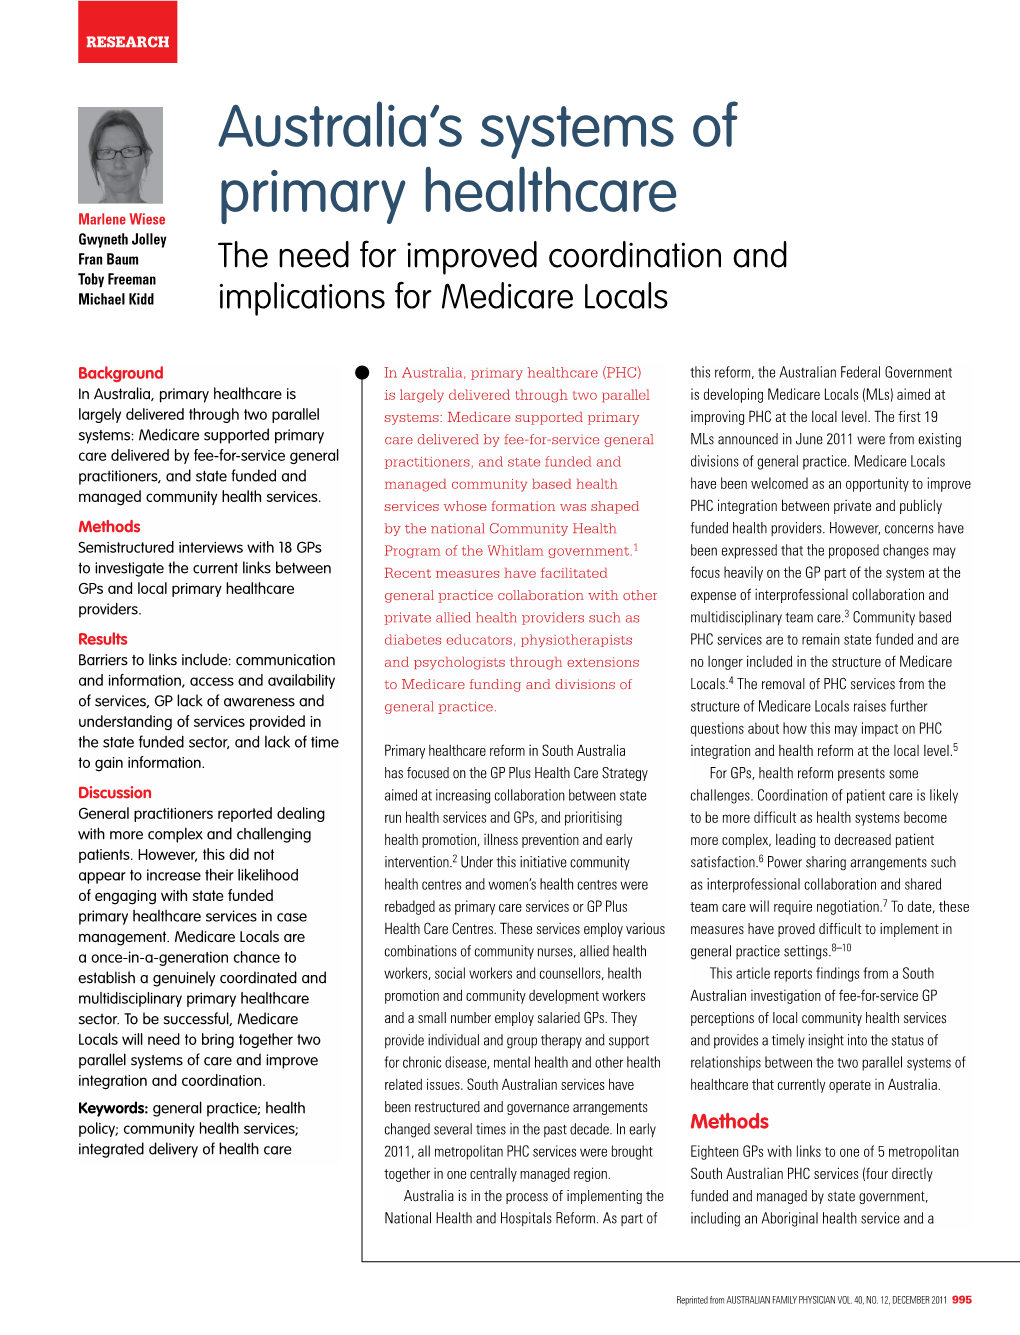 Australia's Systems of Primary Healthcare